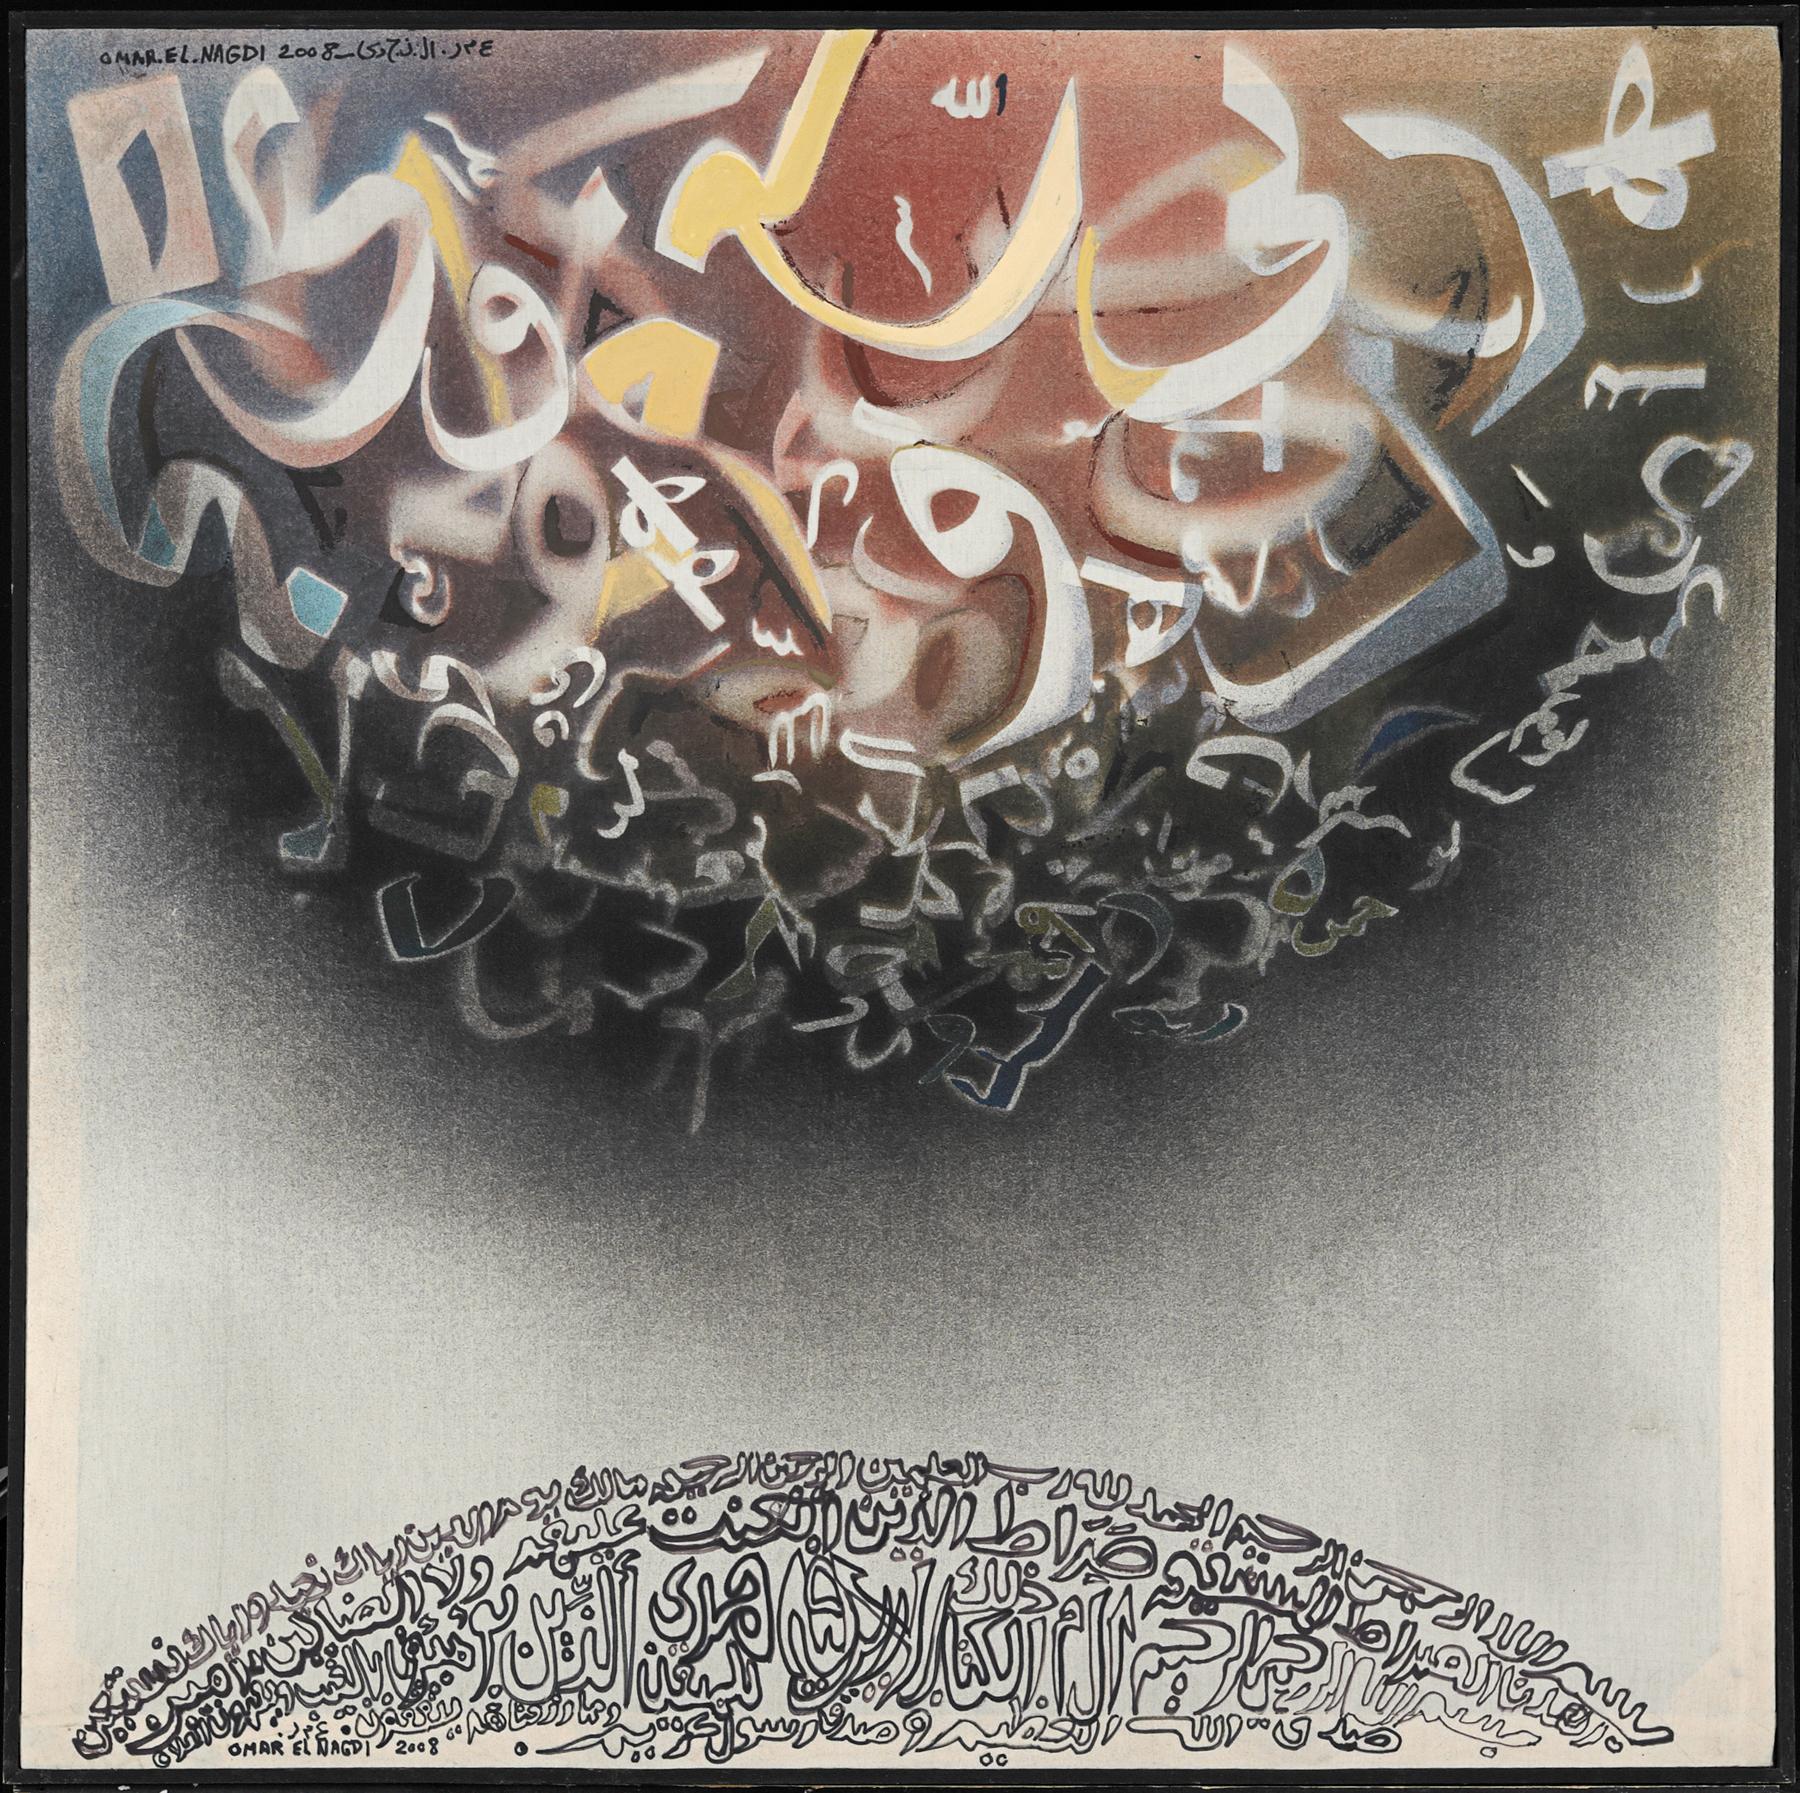 Untitled - Modern, Mix Media on Canvas, Early 21st Century - Mixed Media Art by Omar El-Nagdi